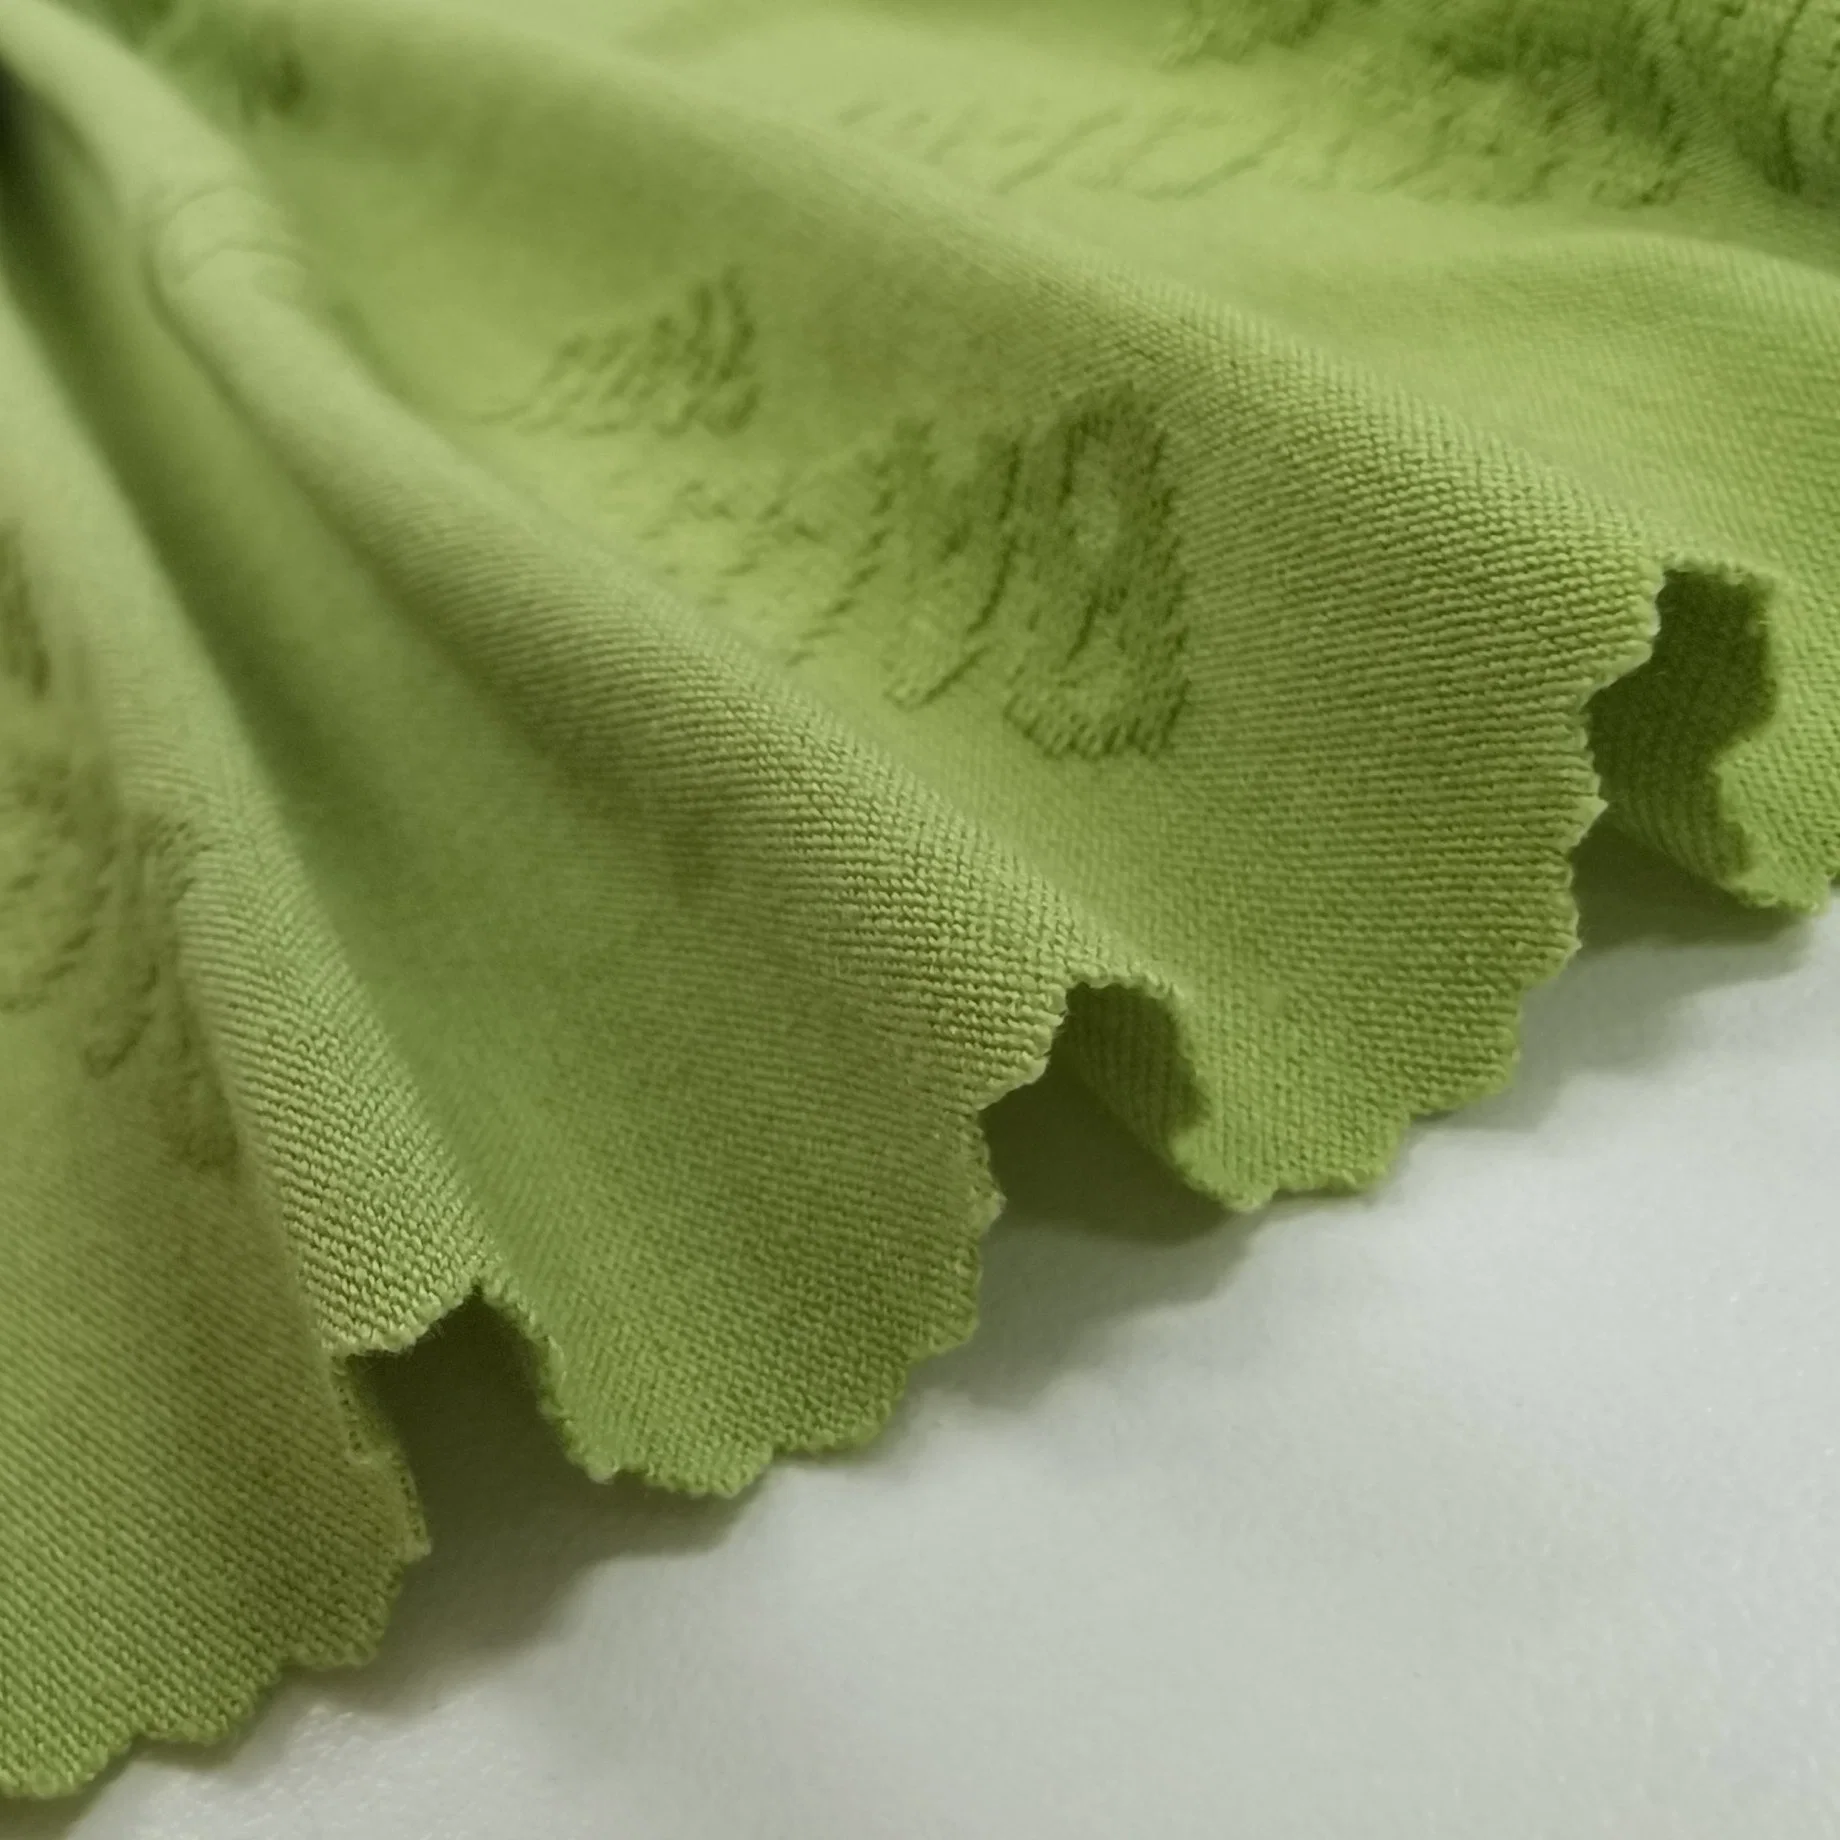 China Textile Tr Stretch Rib Fabric Loop Transfer Rib Jersey Knitted Fabric 67/28/5 Polyester Rayon Spandex Jacquard Rib Knit Fabric for Garment, Dress, T-Shirt